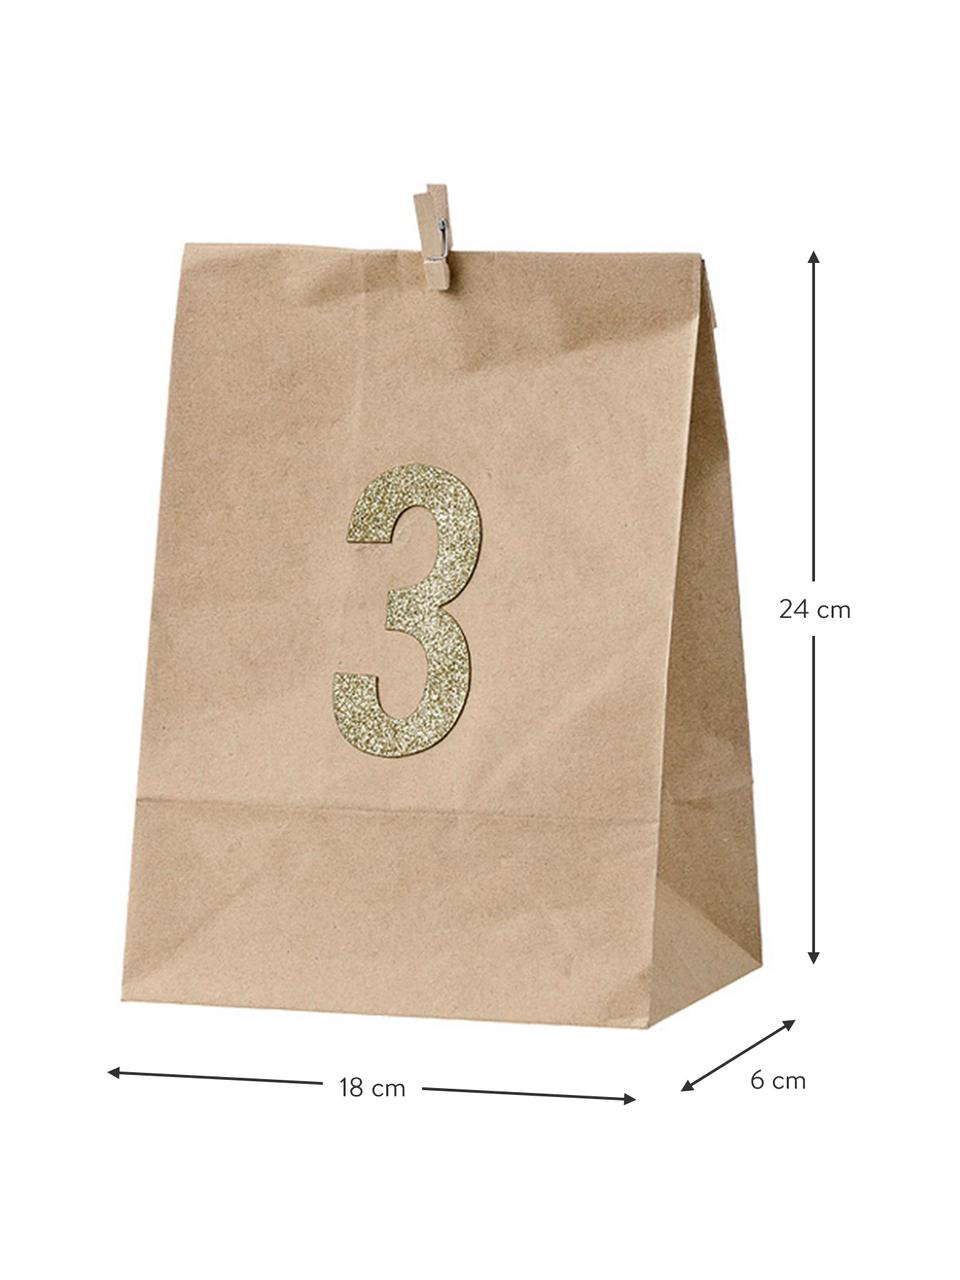 Sada papírových tašek Advent, V 24 cm, 4 díly, Papír, Hnědá, zlatá, Š 18 cm, V 24 cm